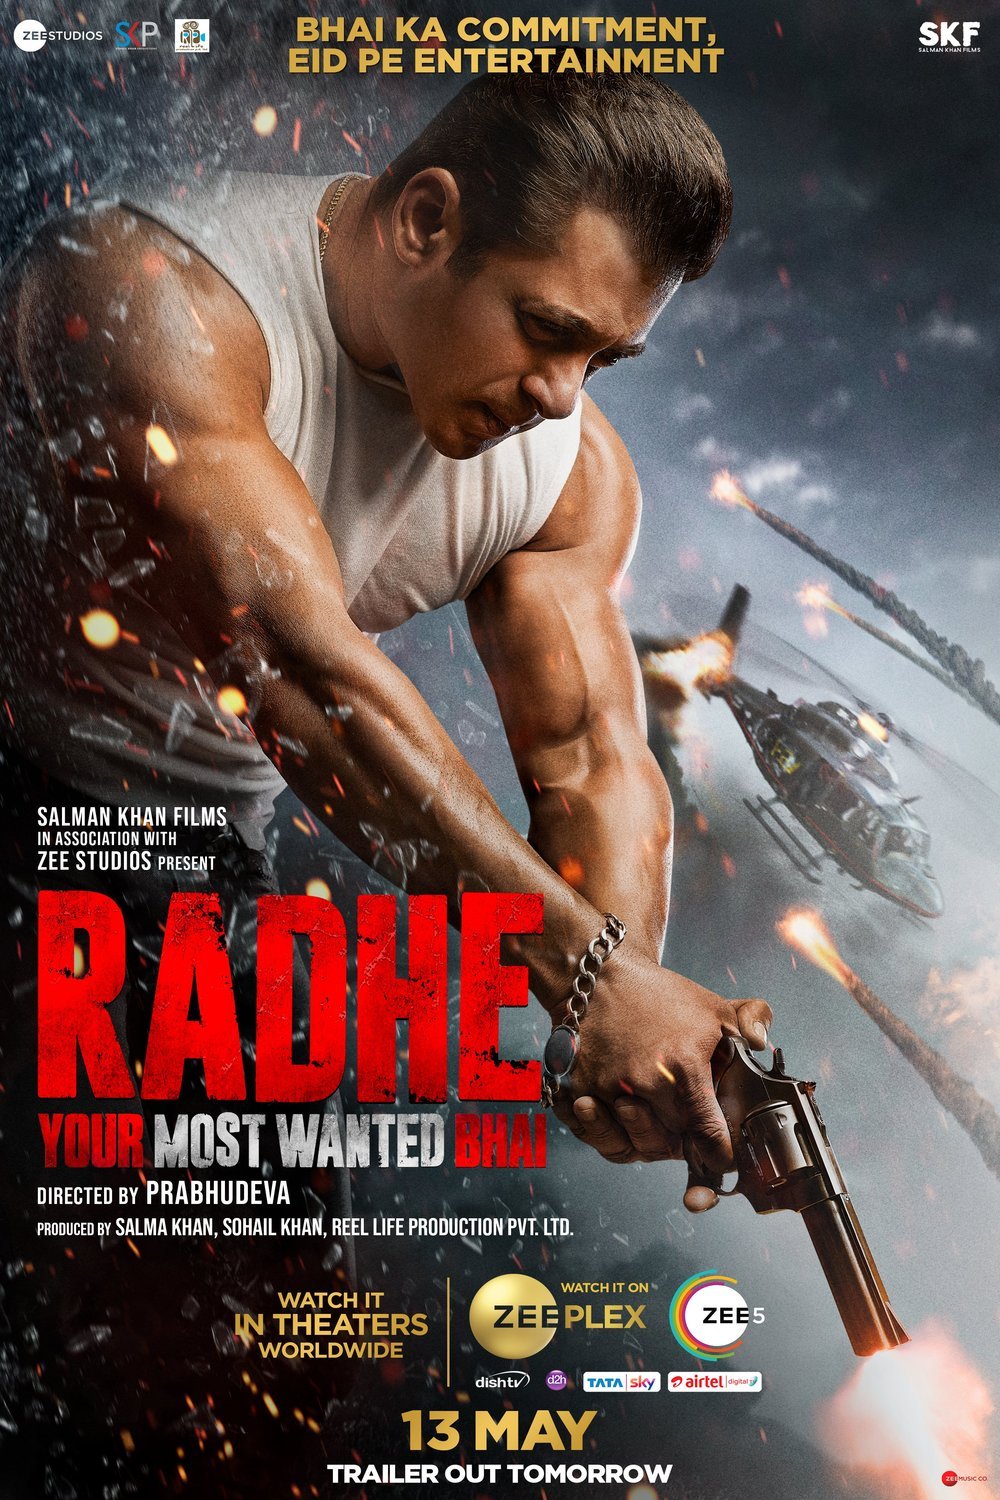 Hindi poster of the movie Radhe